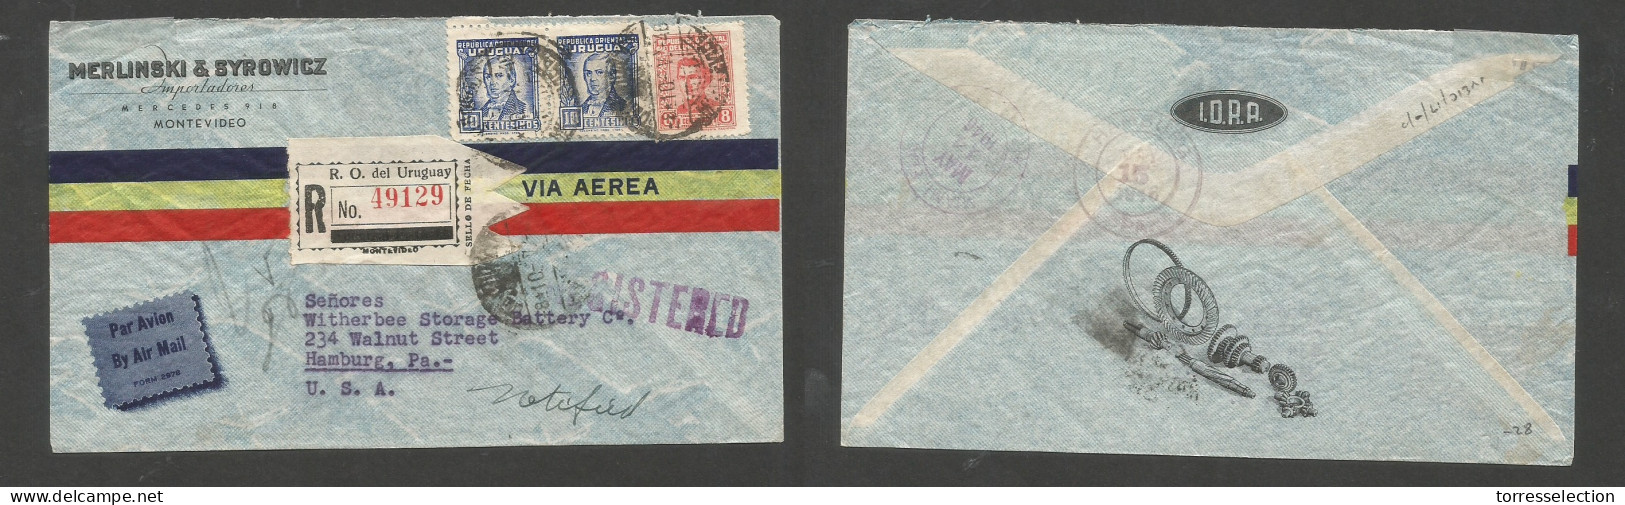 URUGUAY. 1948 (10 May) Mont - USA, PA, Hamburg (14-15 May) Registered Air Multifkd Color Comercial Illustrated Envelope  - Uruguay